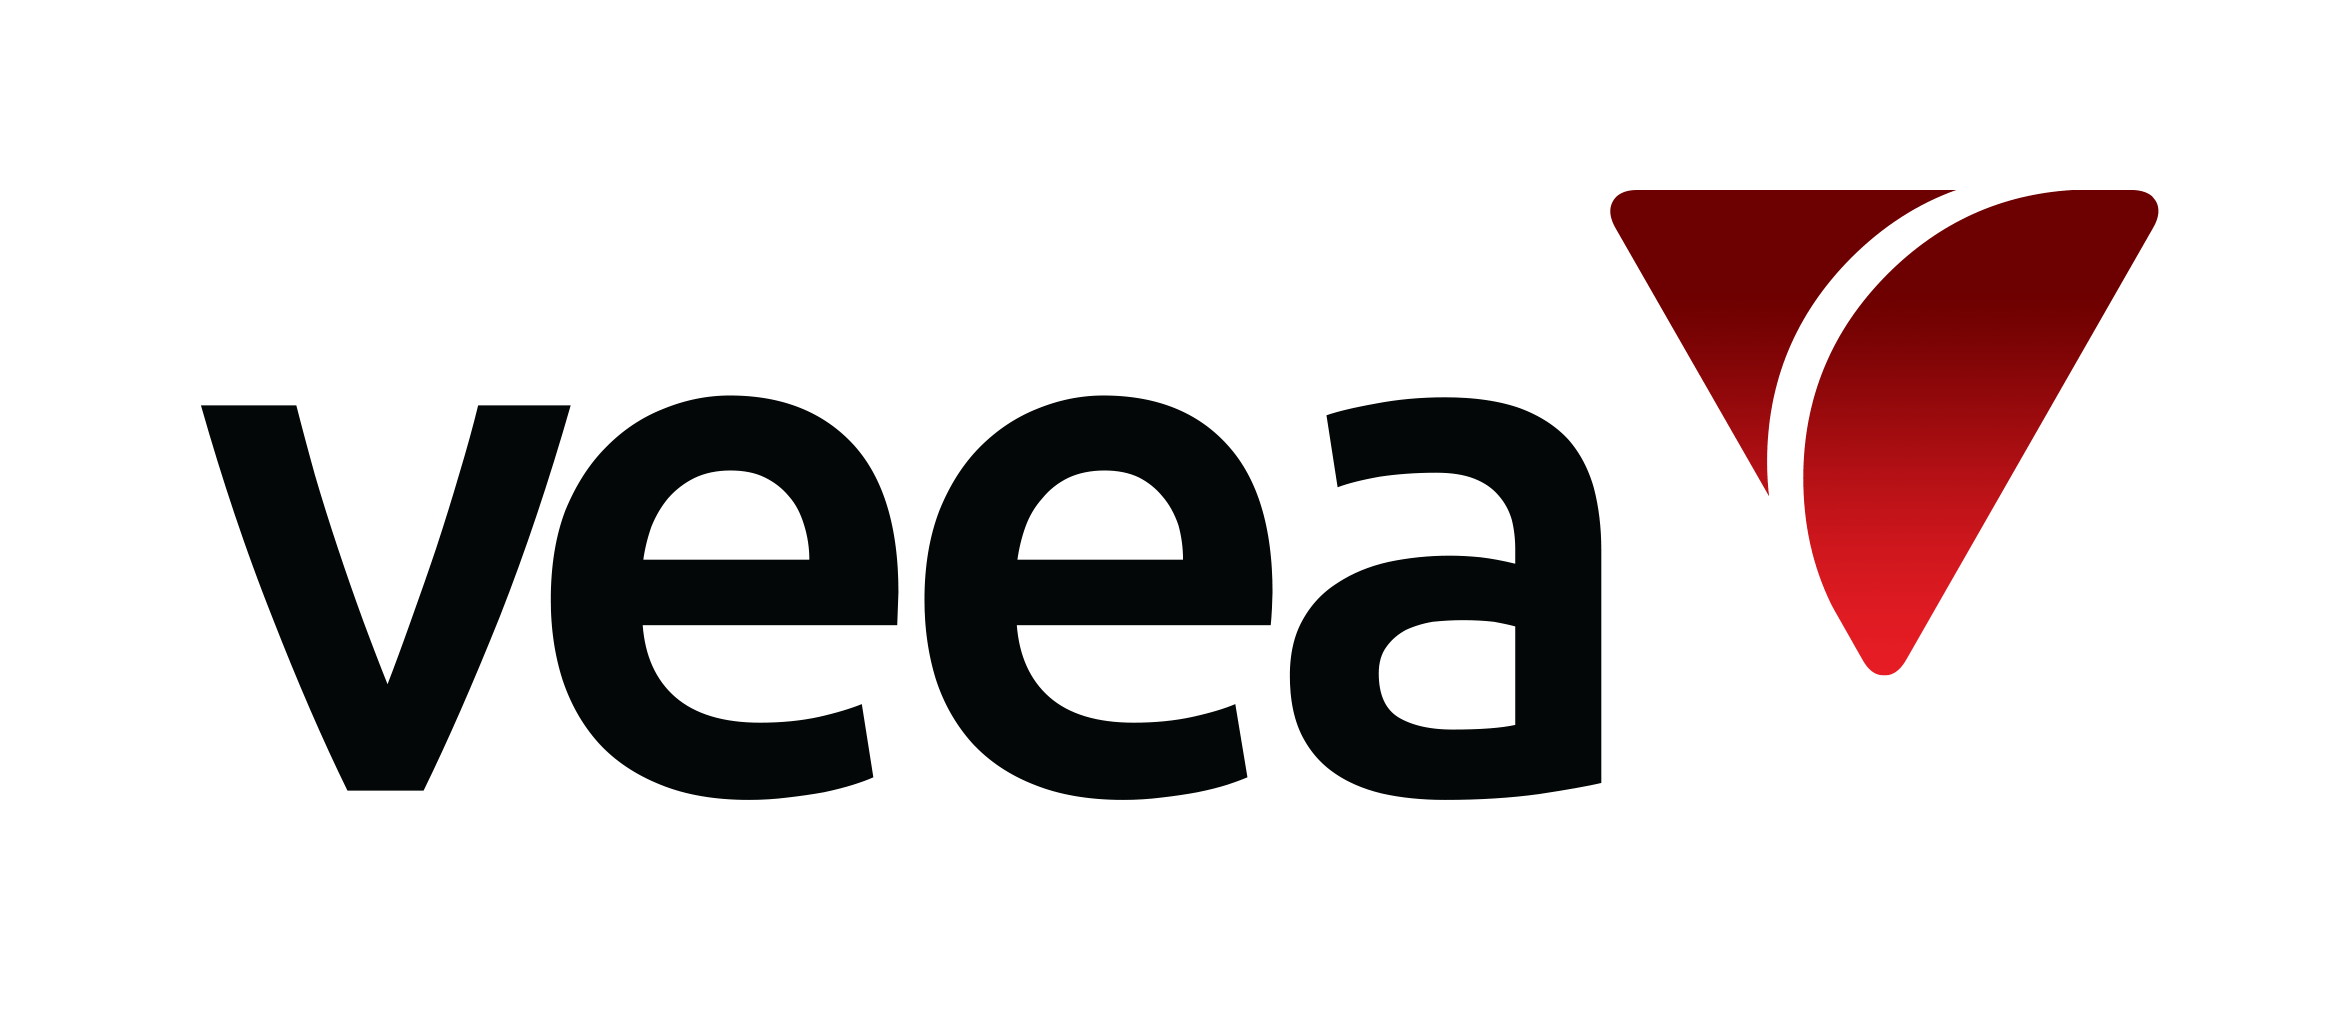 Google Inc Logo - Media and Press Kit Inc. of Veea and VeeaConnect